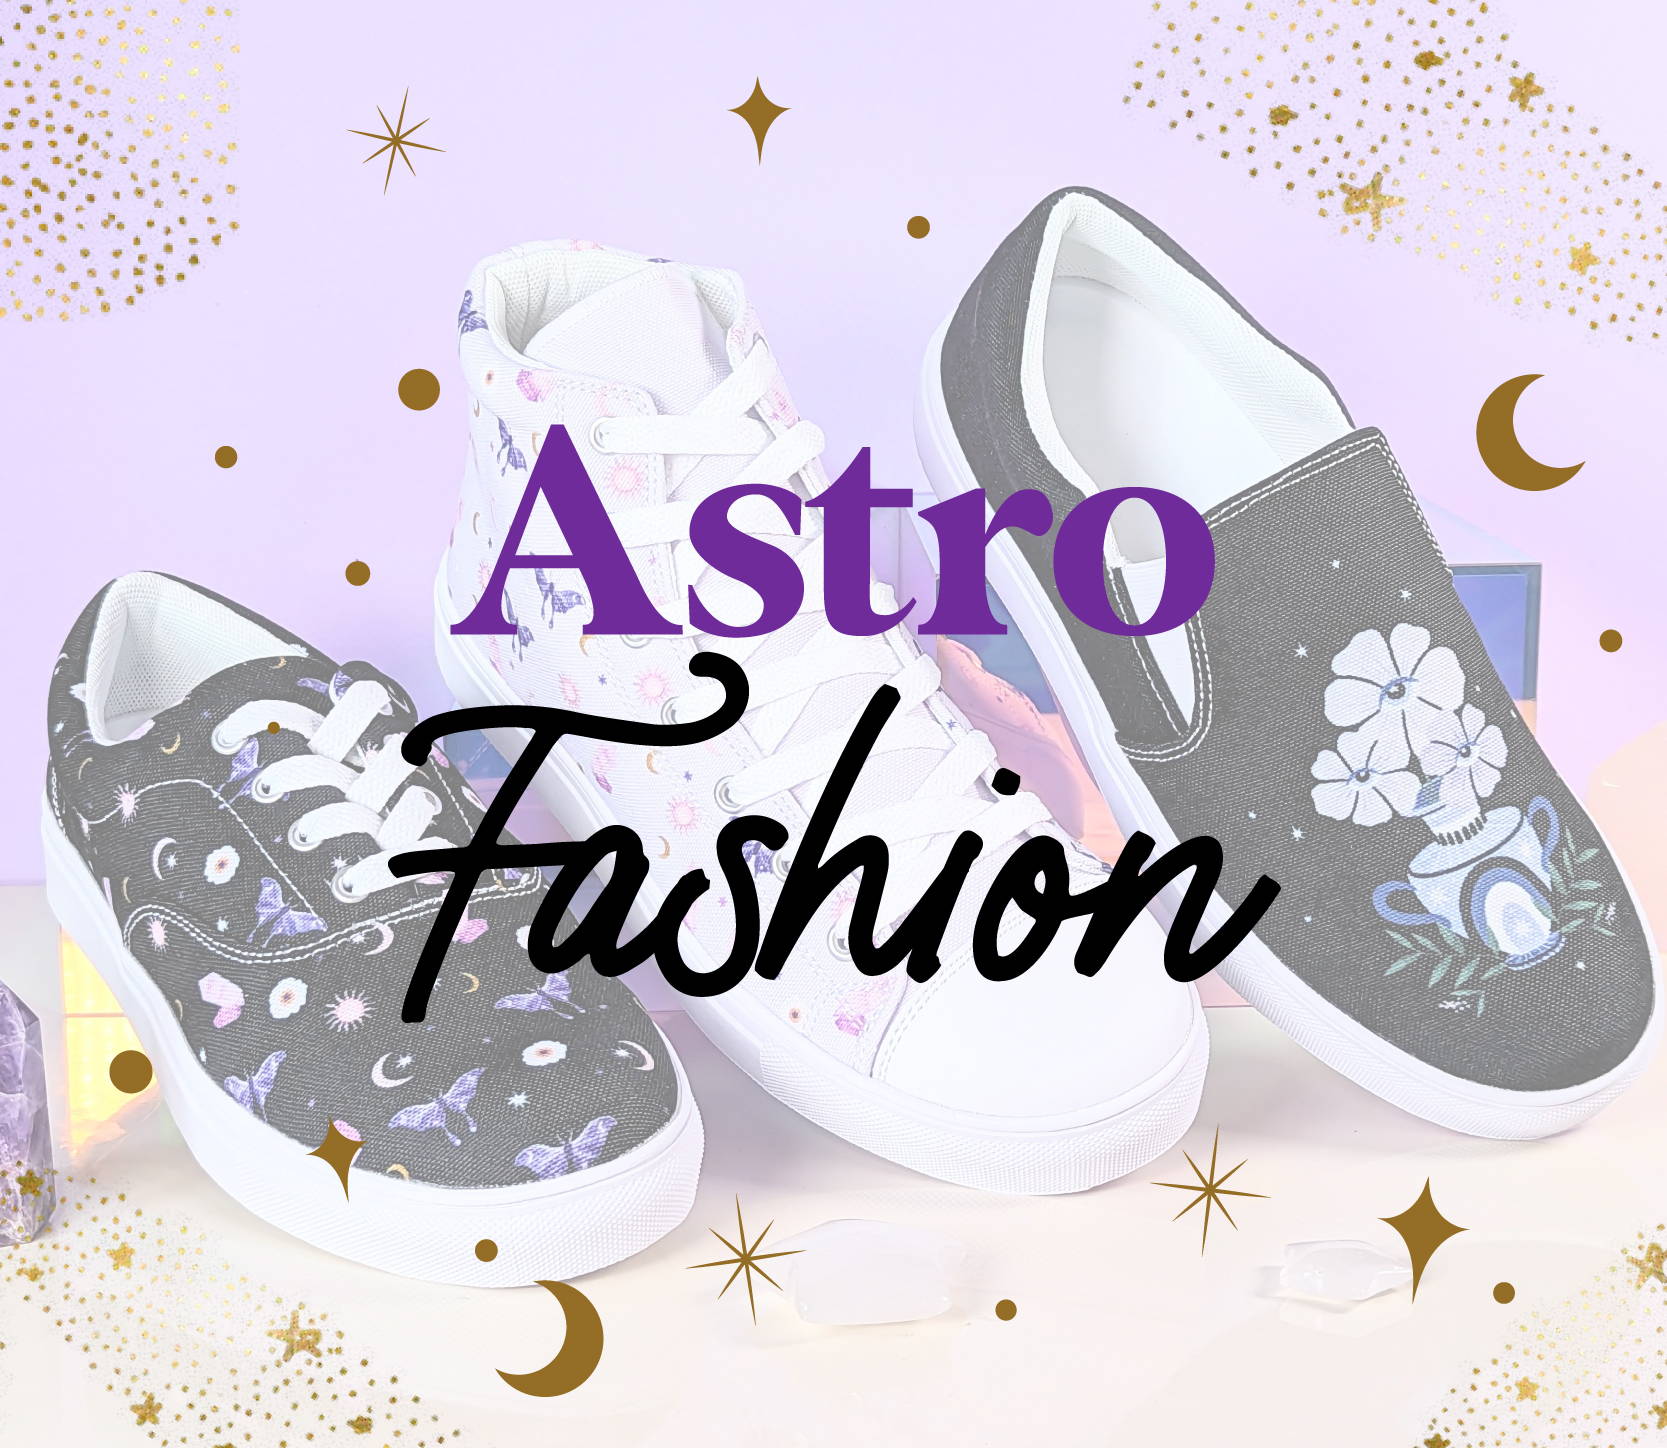 Astro Fashion